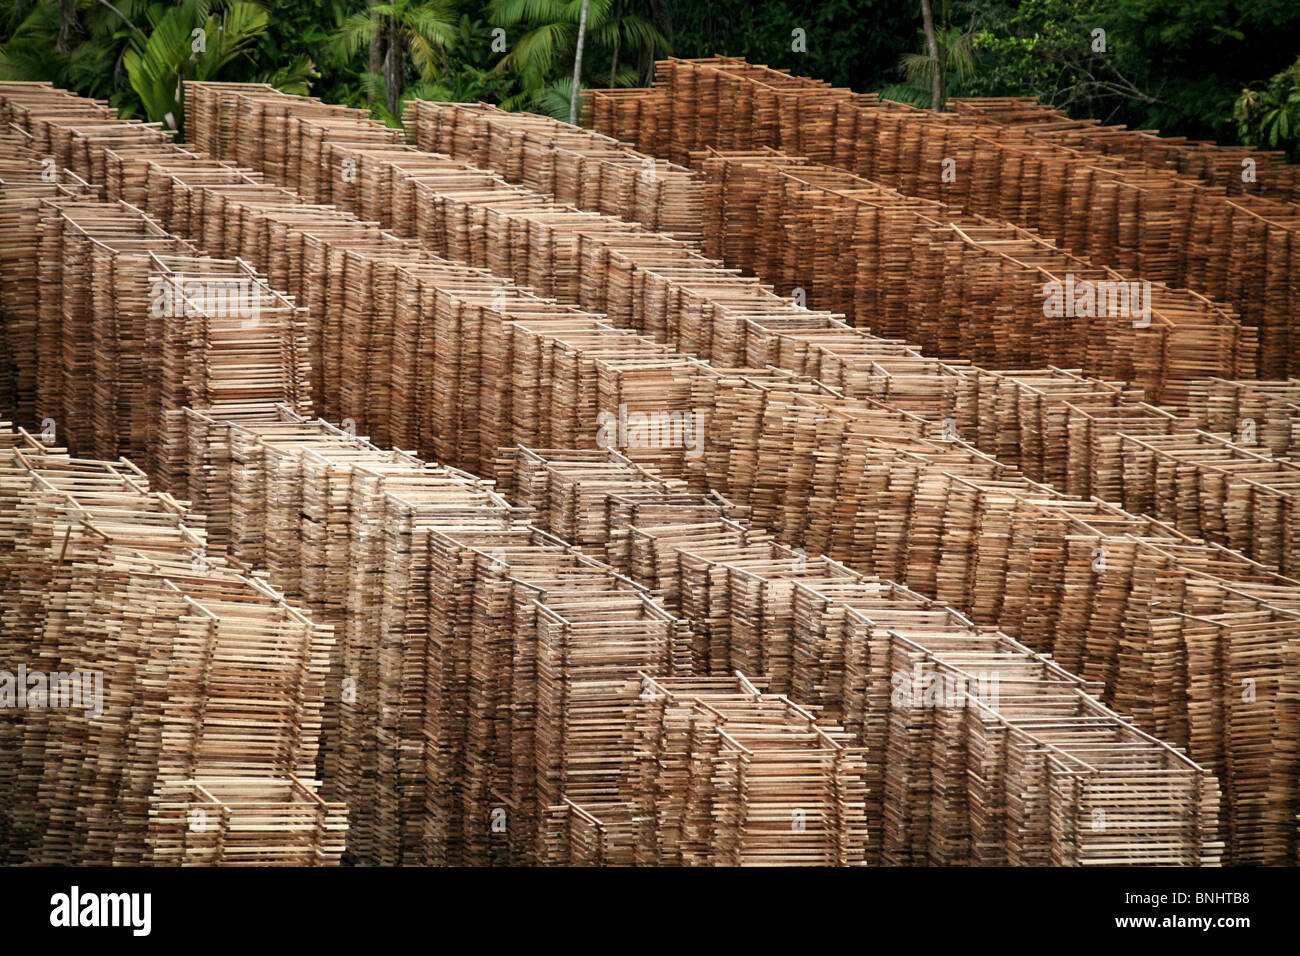 Breves Kanäle Brasilien Amazonas Regenwald Amazonas Dschungel Wald Fluss  Tropen tropischen Holz Holz Holzverarbeitung Stockfotografie - Alamy